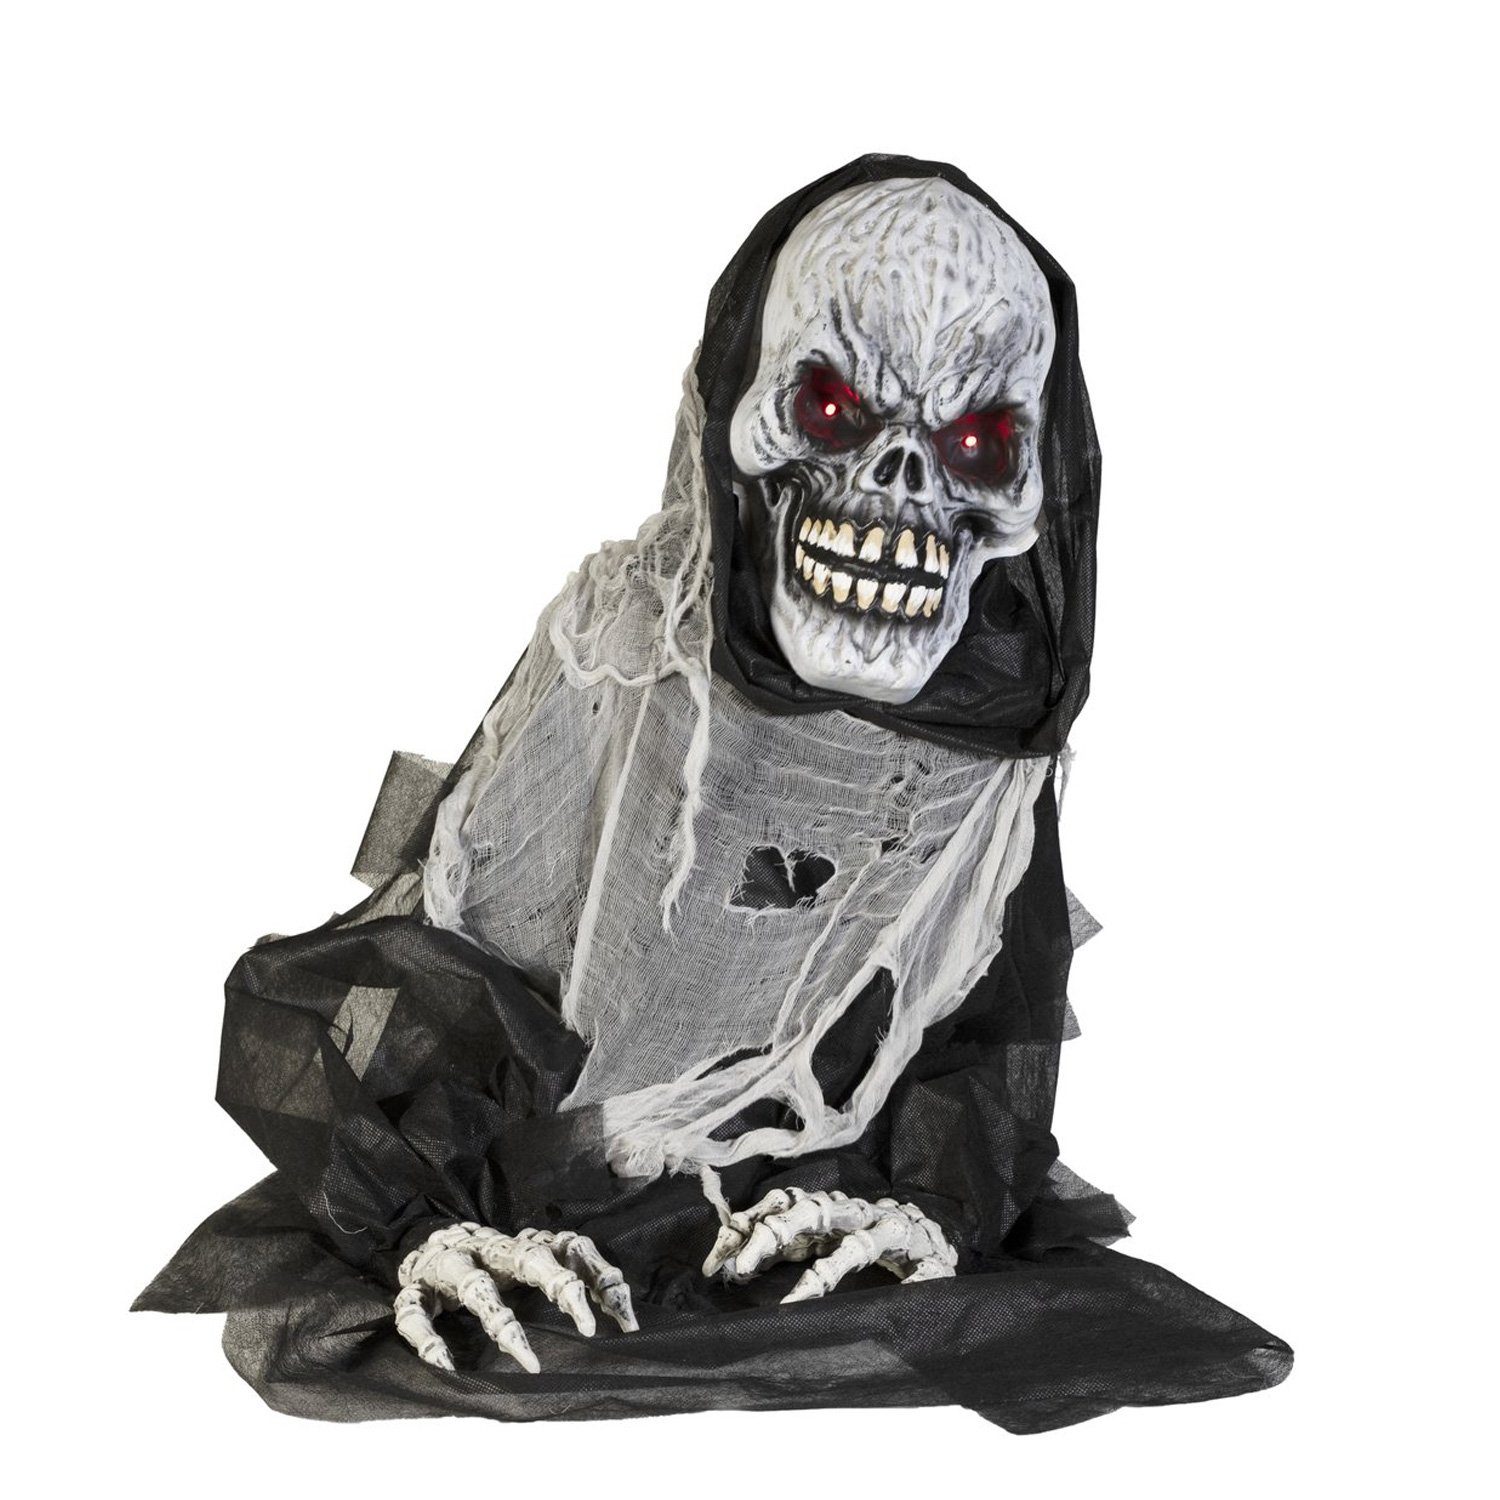 SATISFIRE Dekofigur Halloween Figur DEATH MAN, 68cm - bewegte, gruselige Zomiefigur